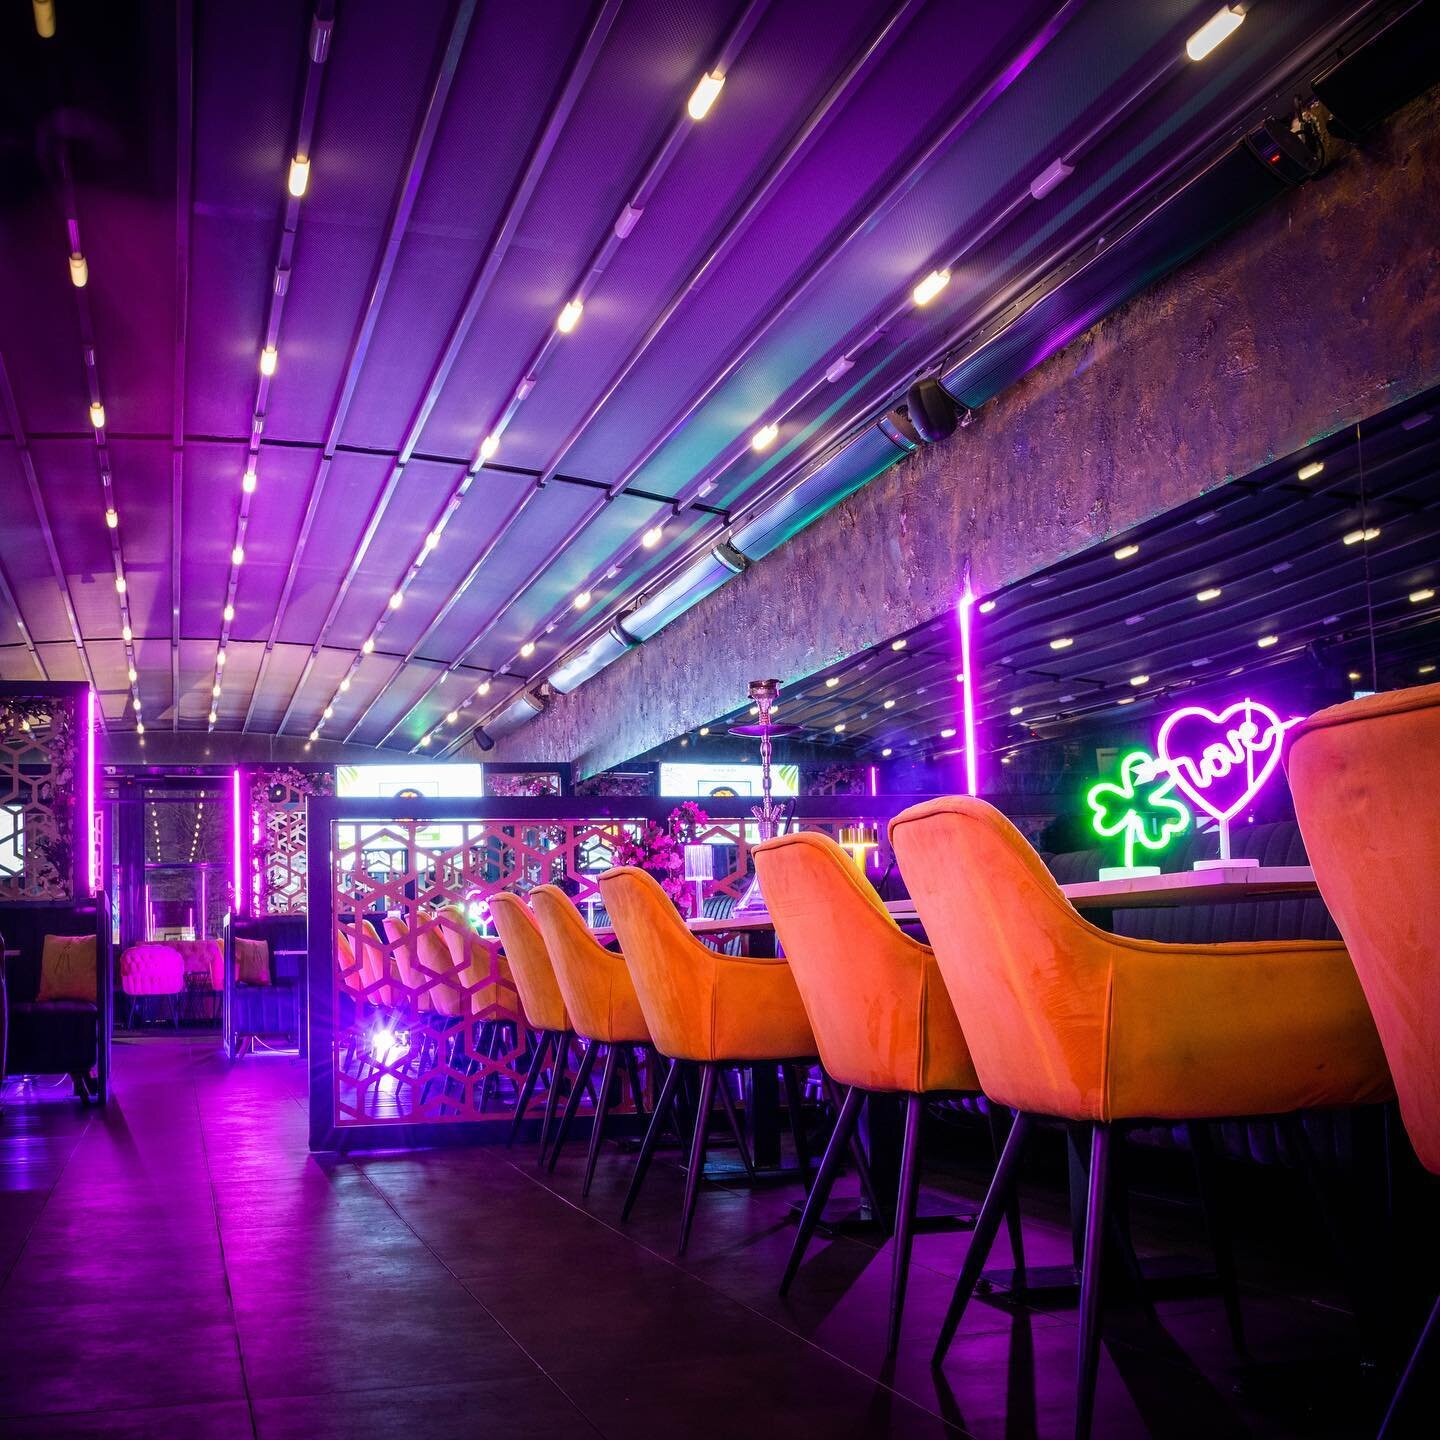 Let us make your dreams come true ❤️

Make a reservation:⁠
📞 020 3982 0890⁠
🌐 cieloprlr.co.uk⁠
📍 1 Charcot Rd, London NW9 5HG⁠

#cieloprlr #cielo #colindale #london #londonhotspots #lounge #londonrestaurants #londonlife #foodie #bestrestaurants #l